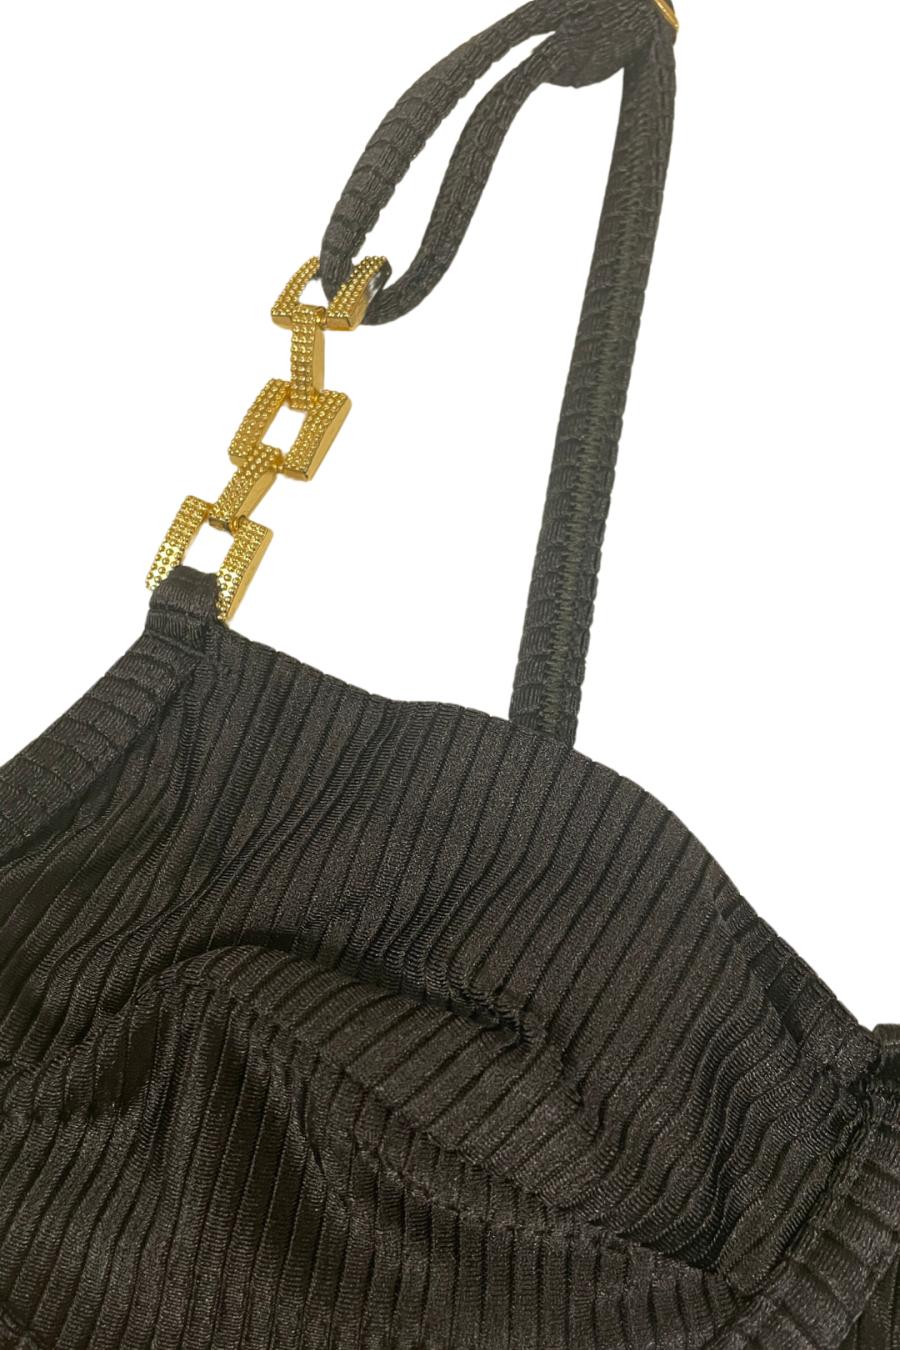 Crochet handbag (sac à main en crochet)